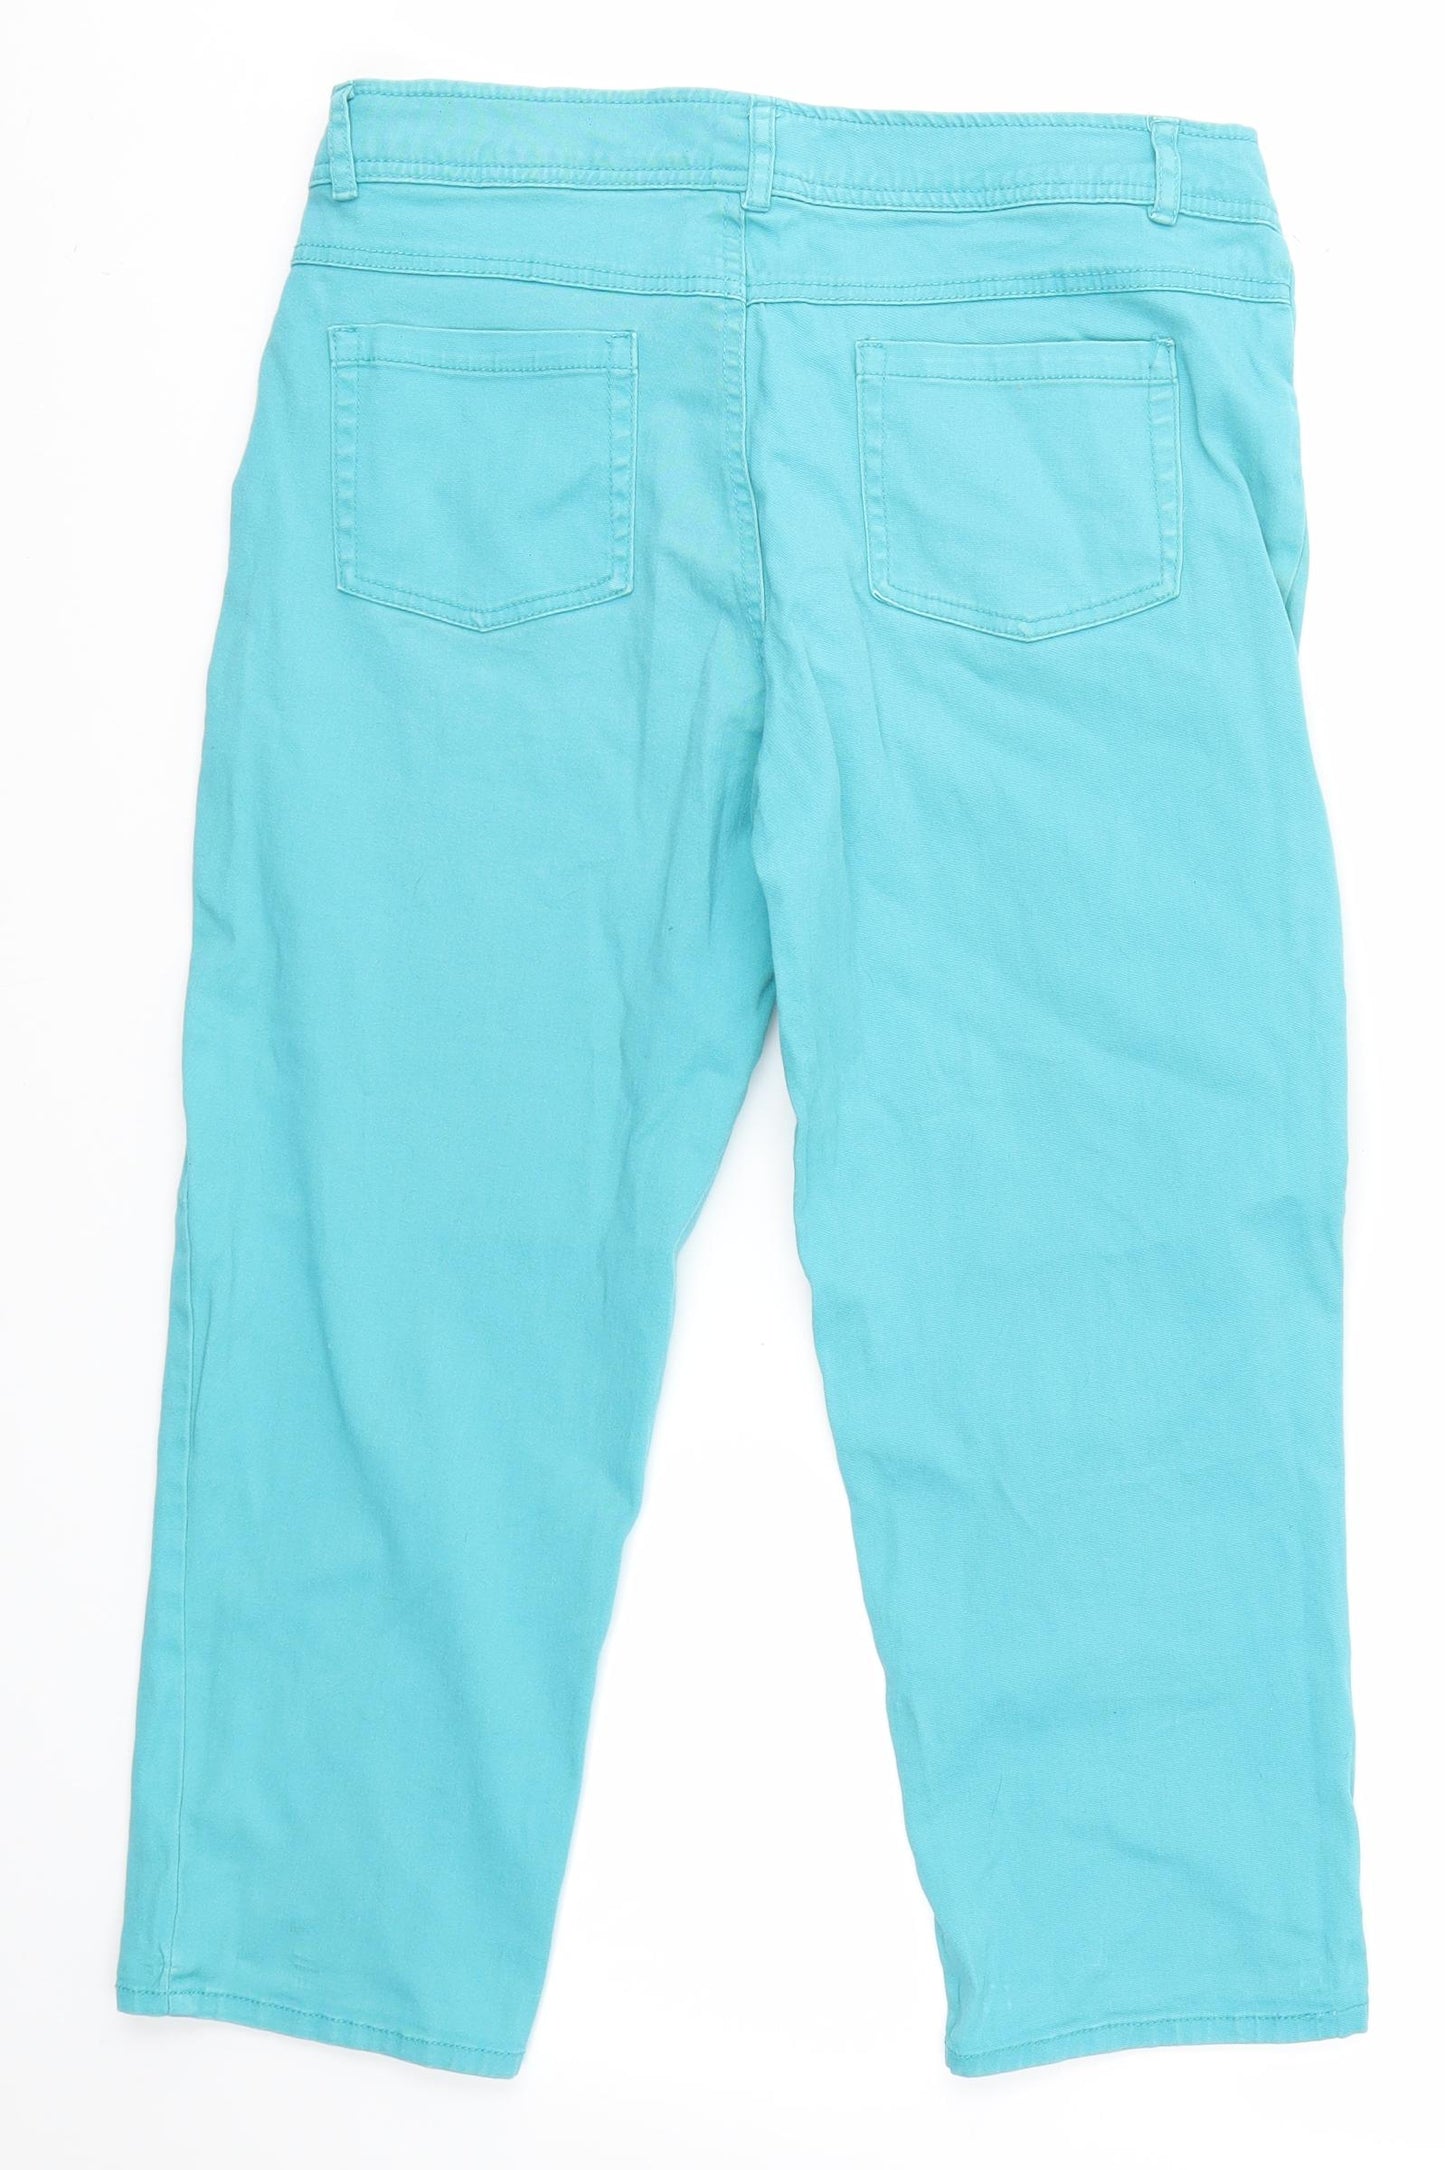 Denim 24/7 Womens Blue   Cropped Jeans Size 12 L21 in